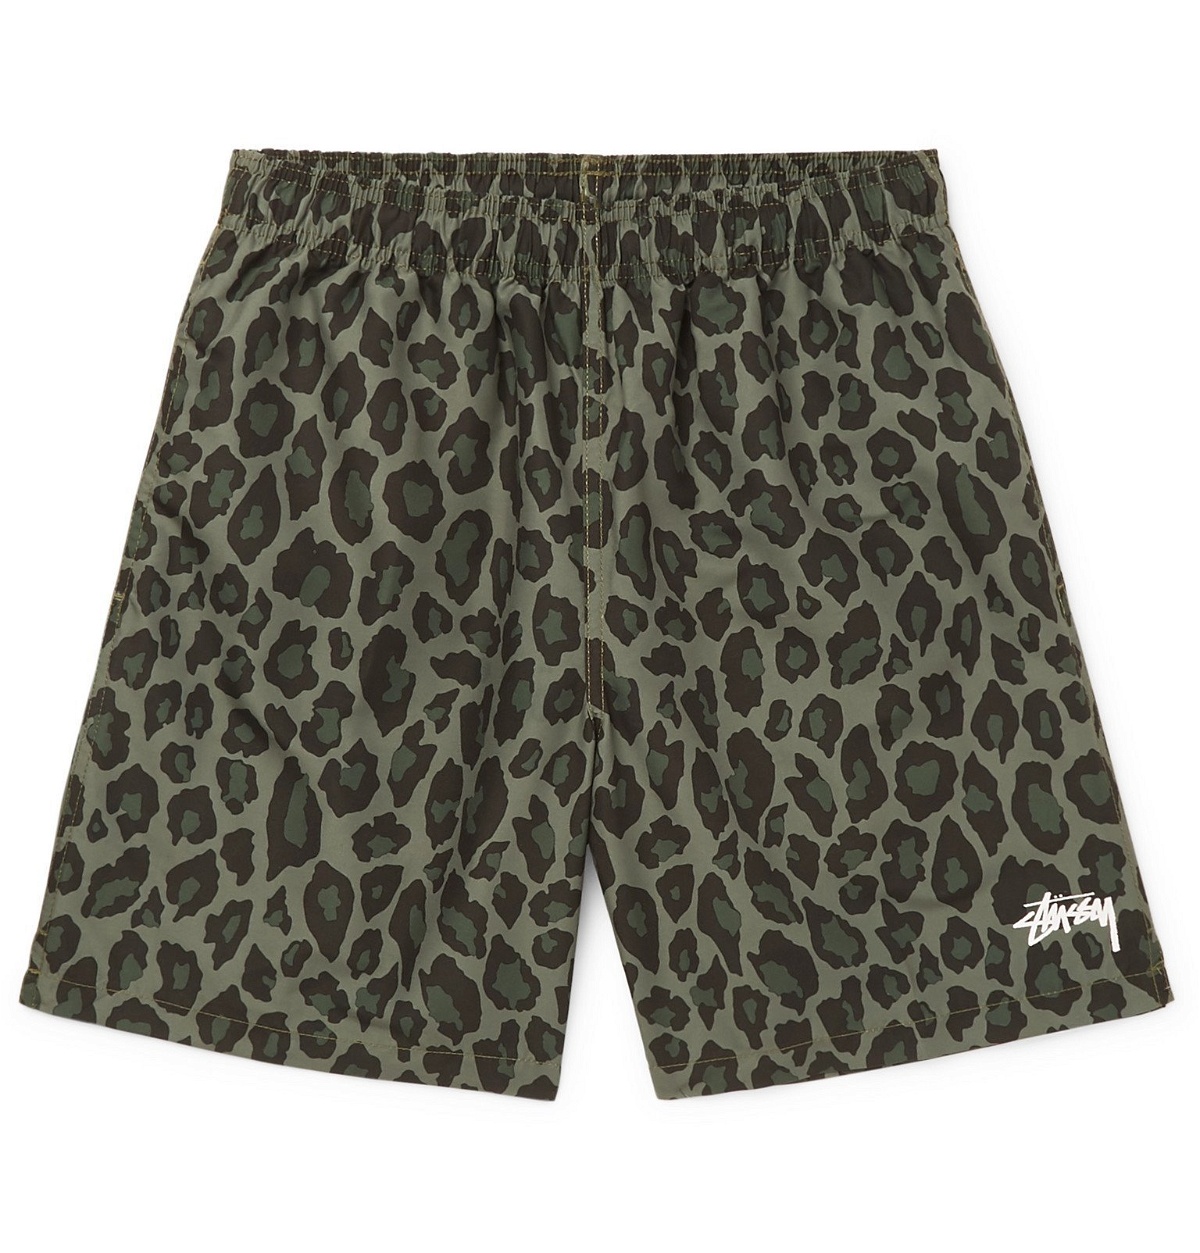 Stüssy - Leopard-Print Shell Shorts - Green Stussy